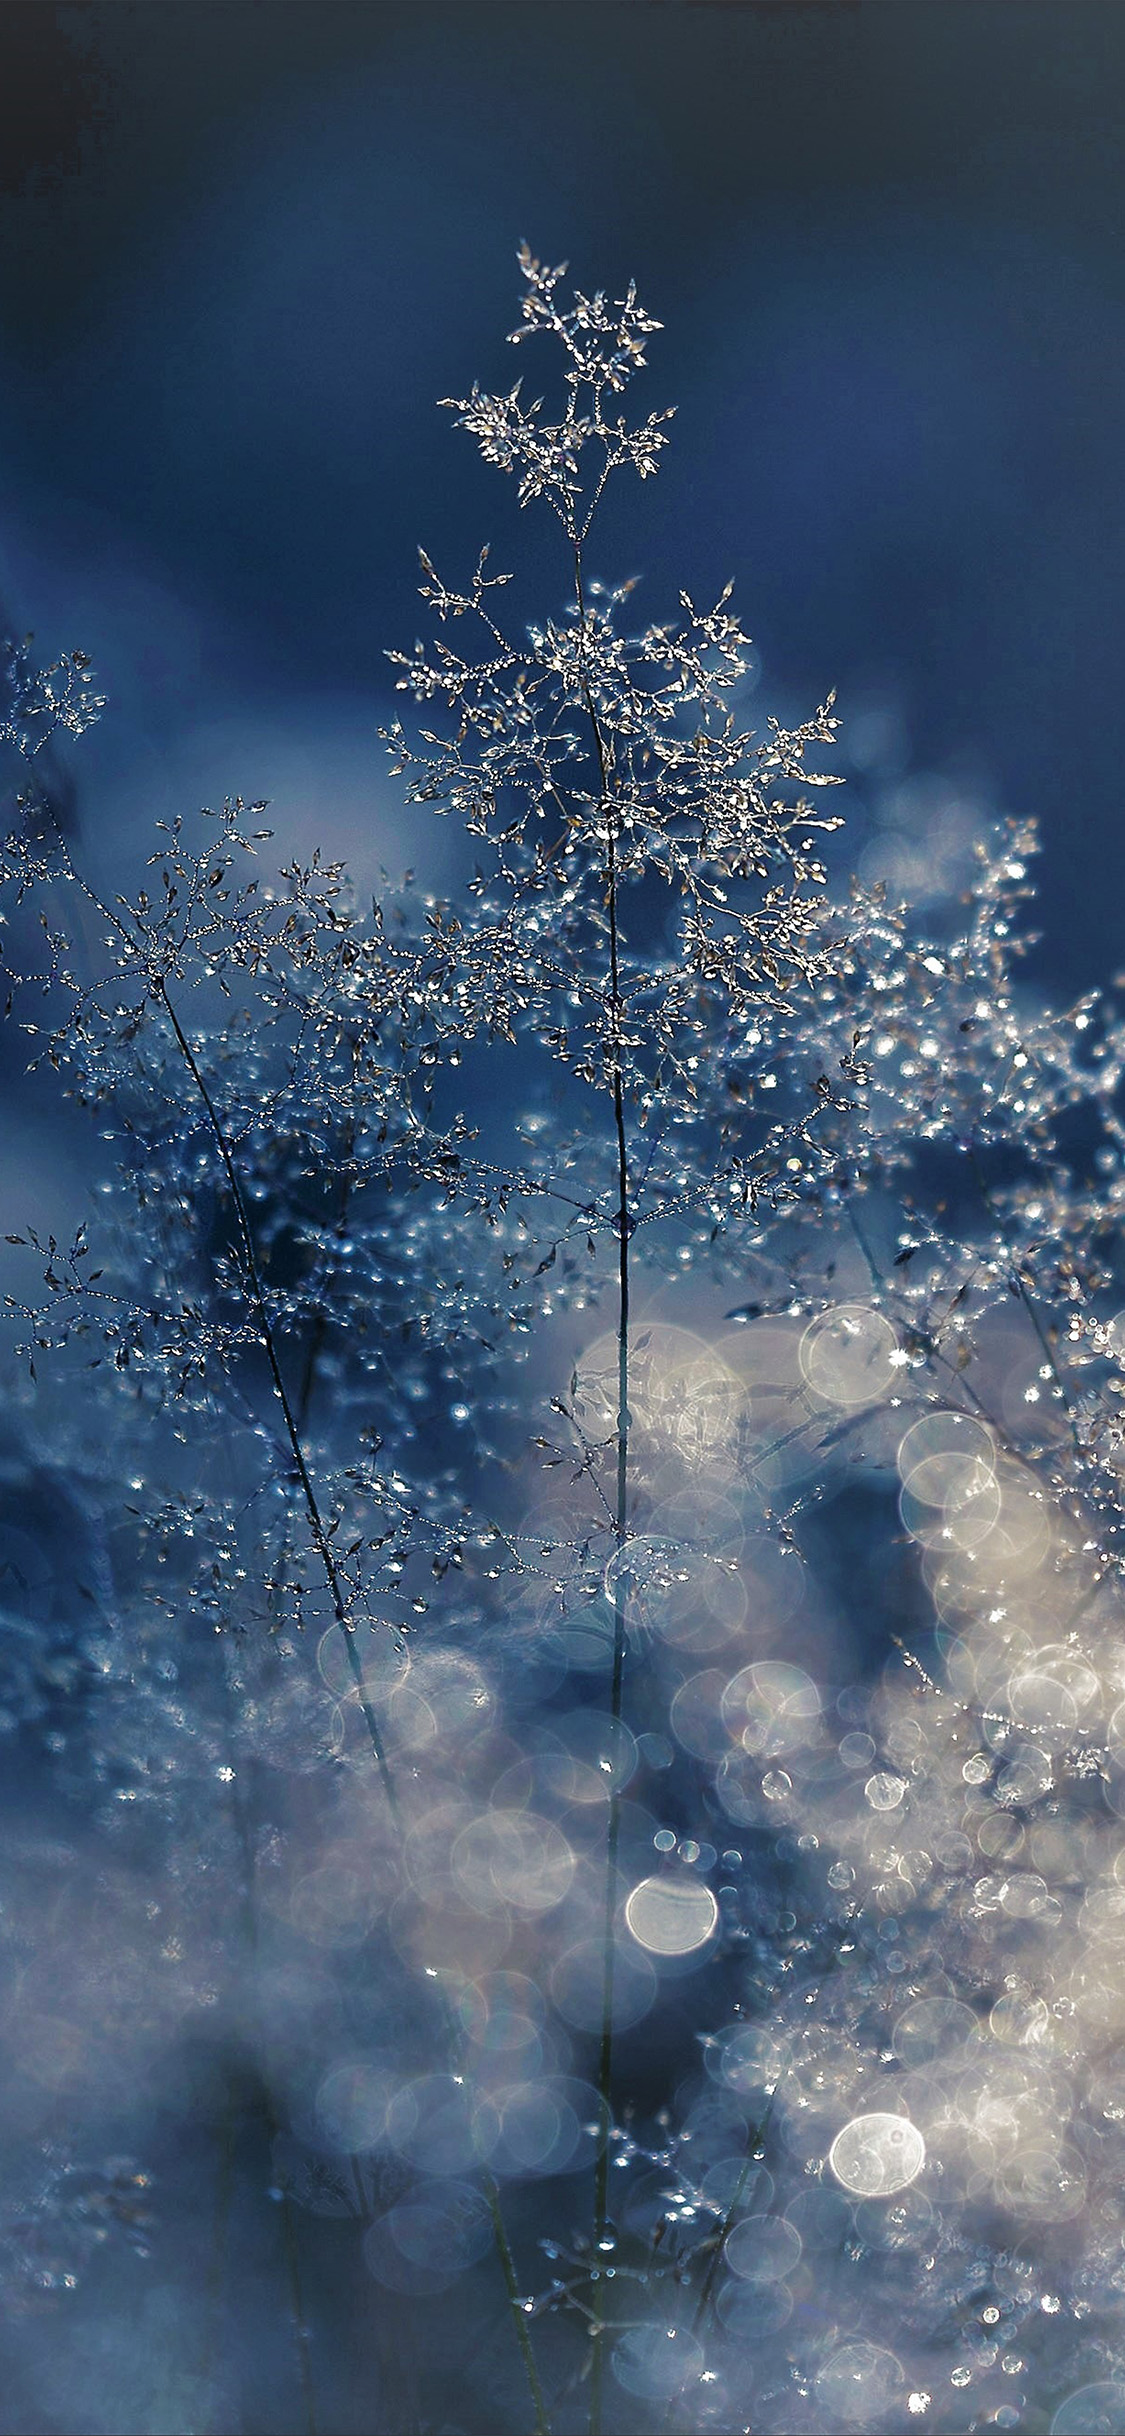 iPhone X wallpaper. snow bokeh light beautiful nature blue